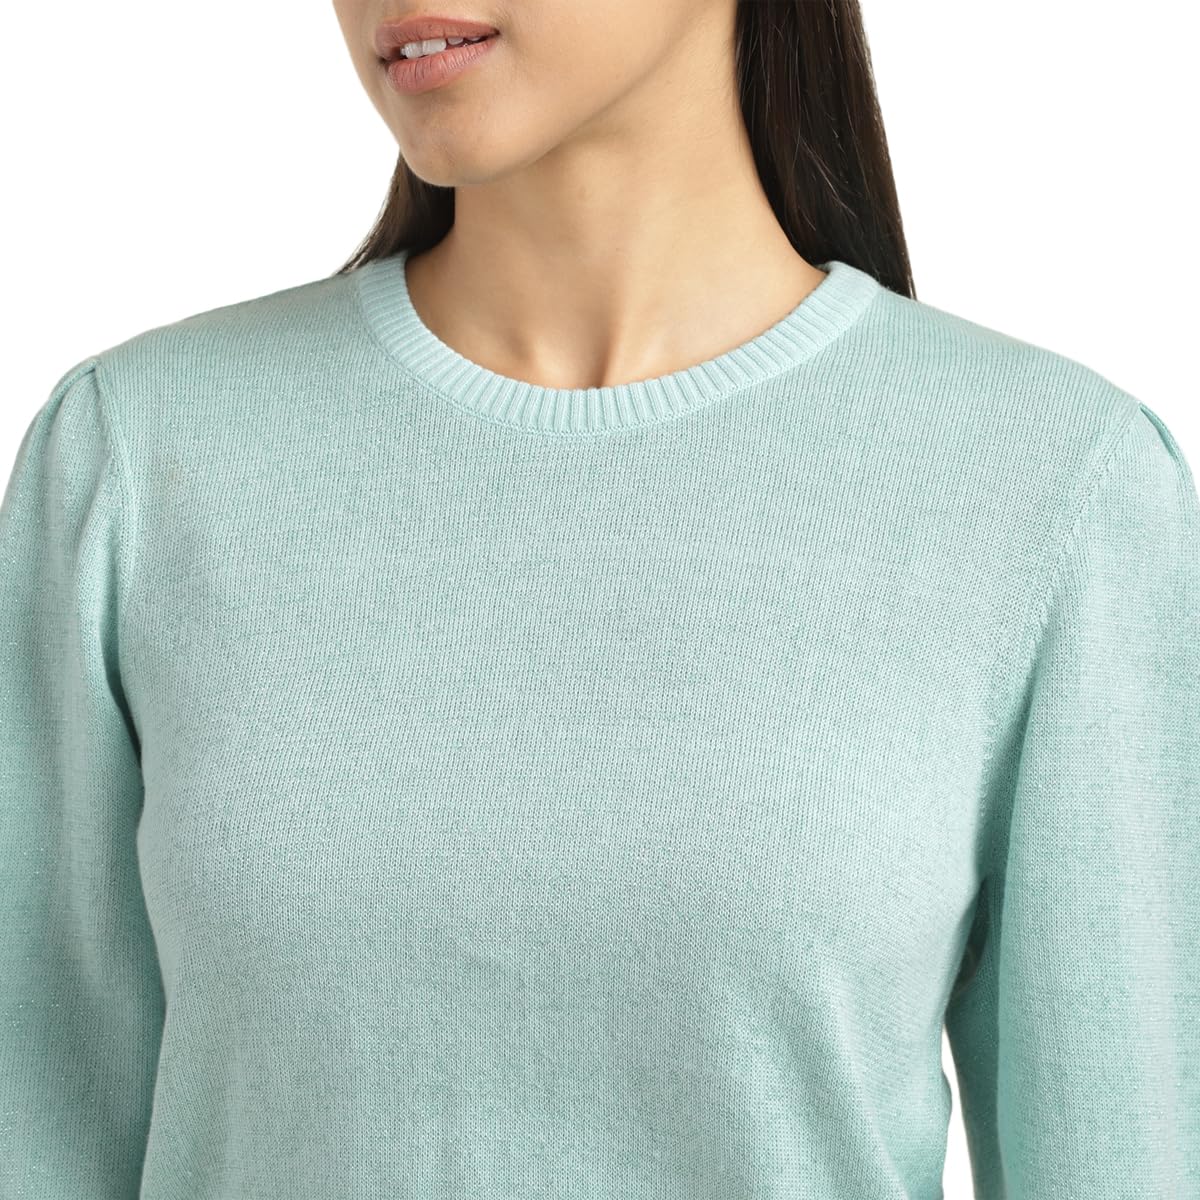 Levi's Women's Cotton Blend Casual Sweater (A3923-0006_Blue